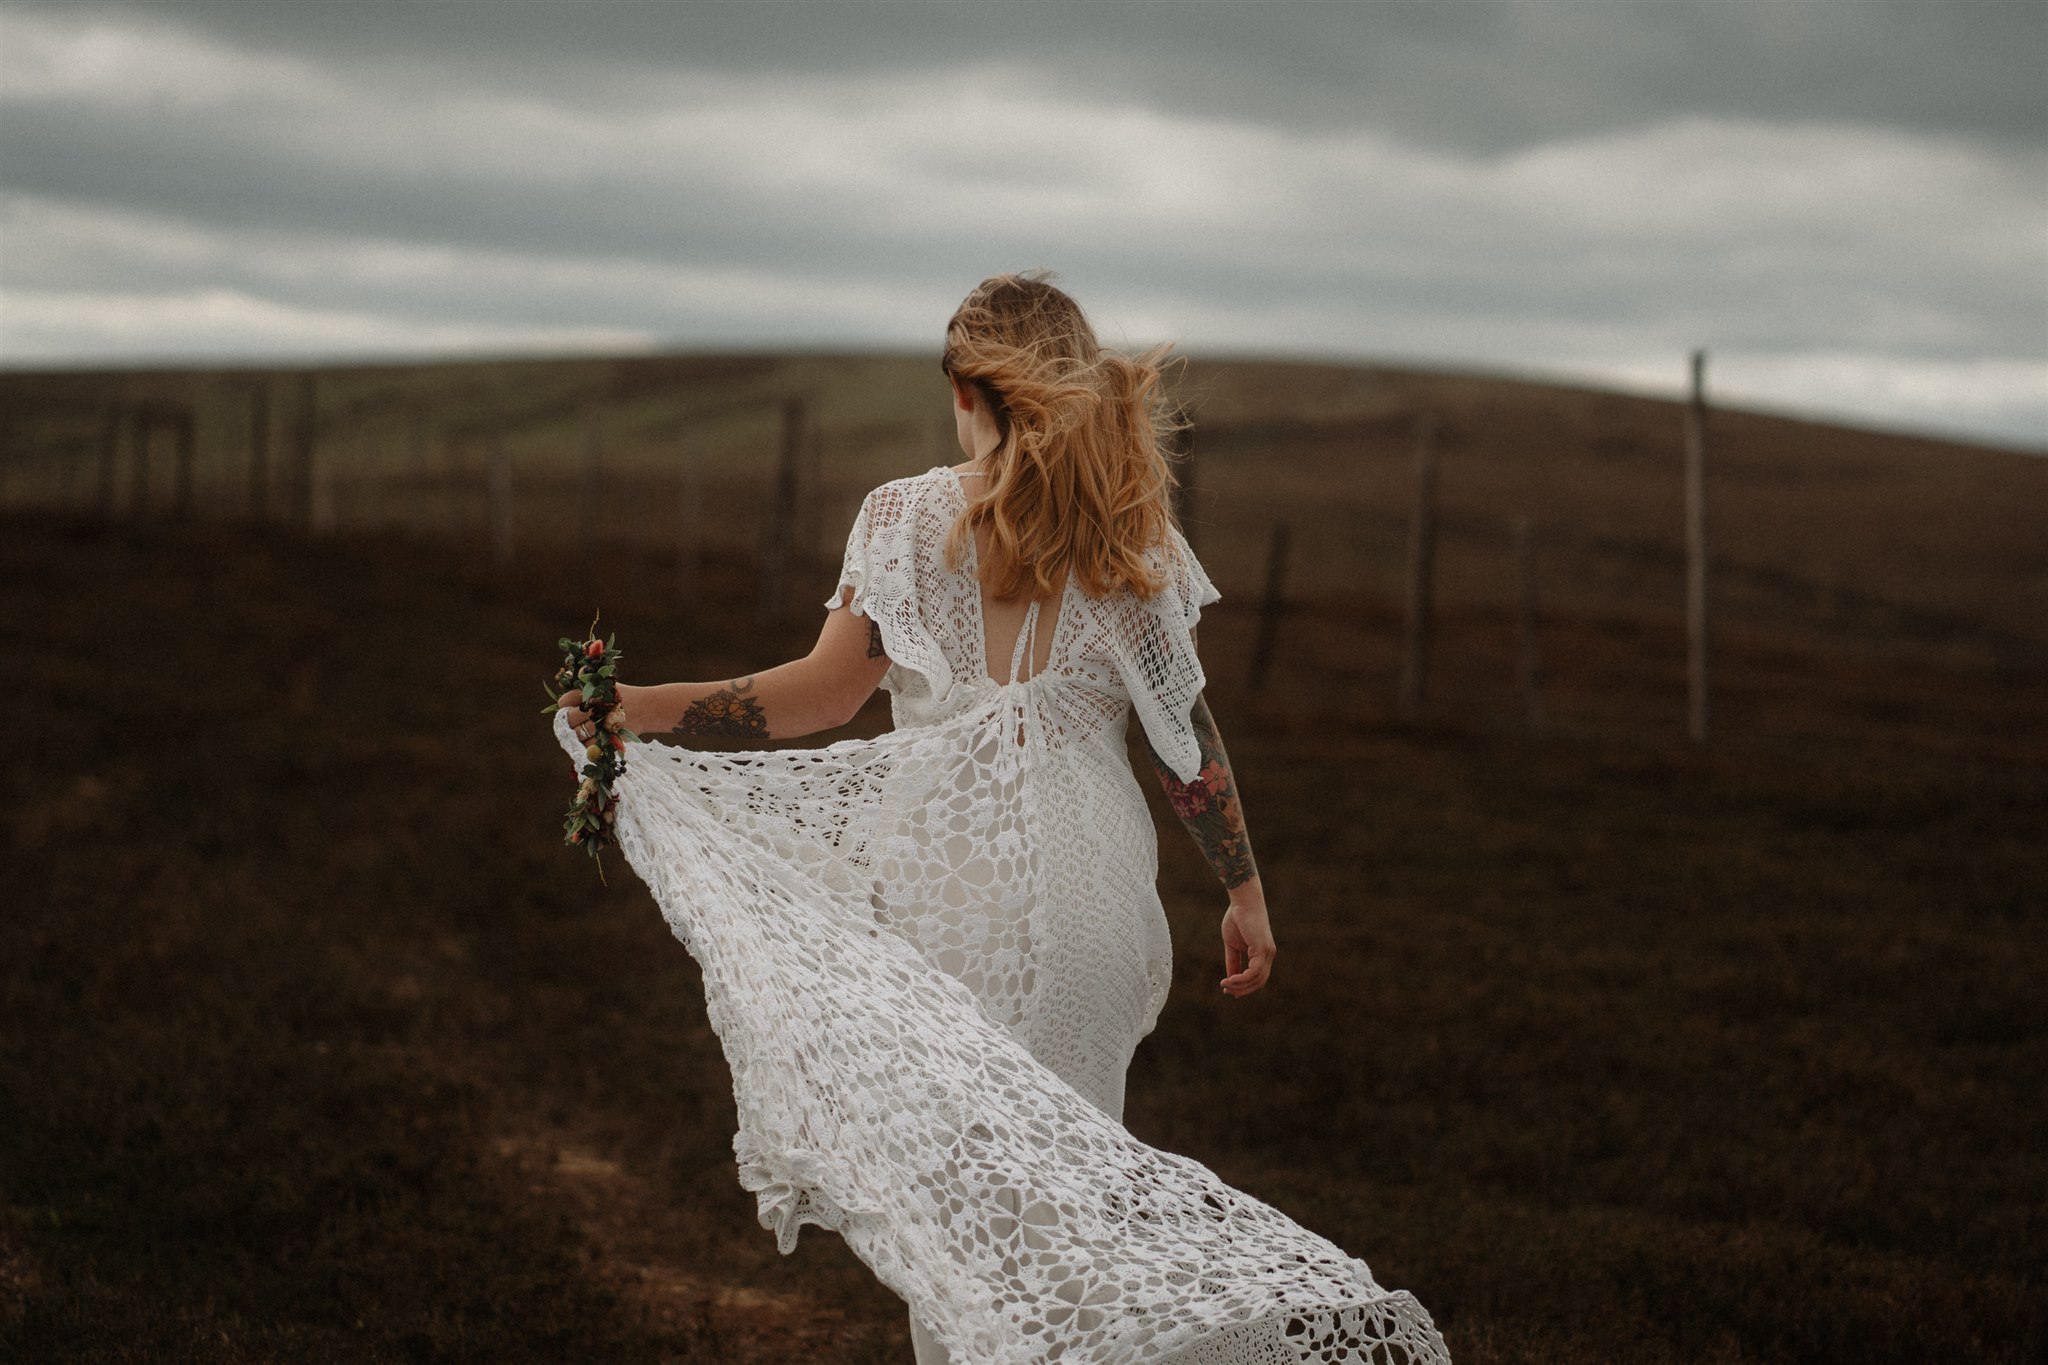 fleetwood mac inspired wedding - lace wedding dress - bohemian wedding dress - outdoor wedding dress